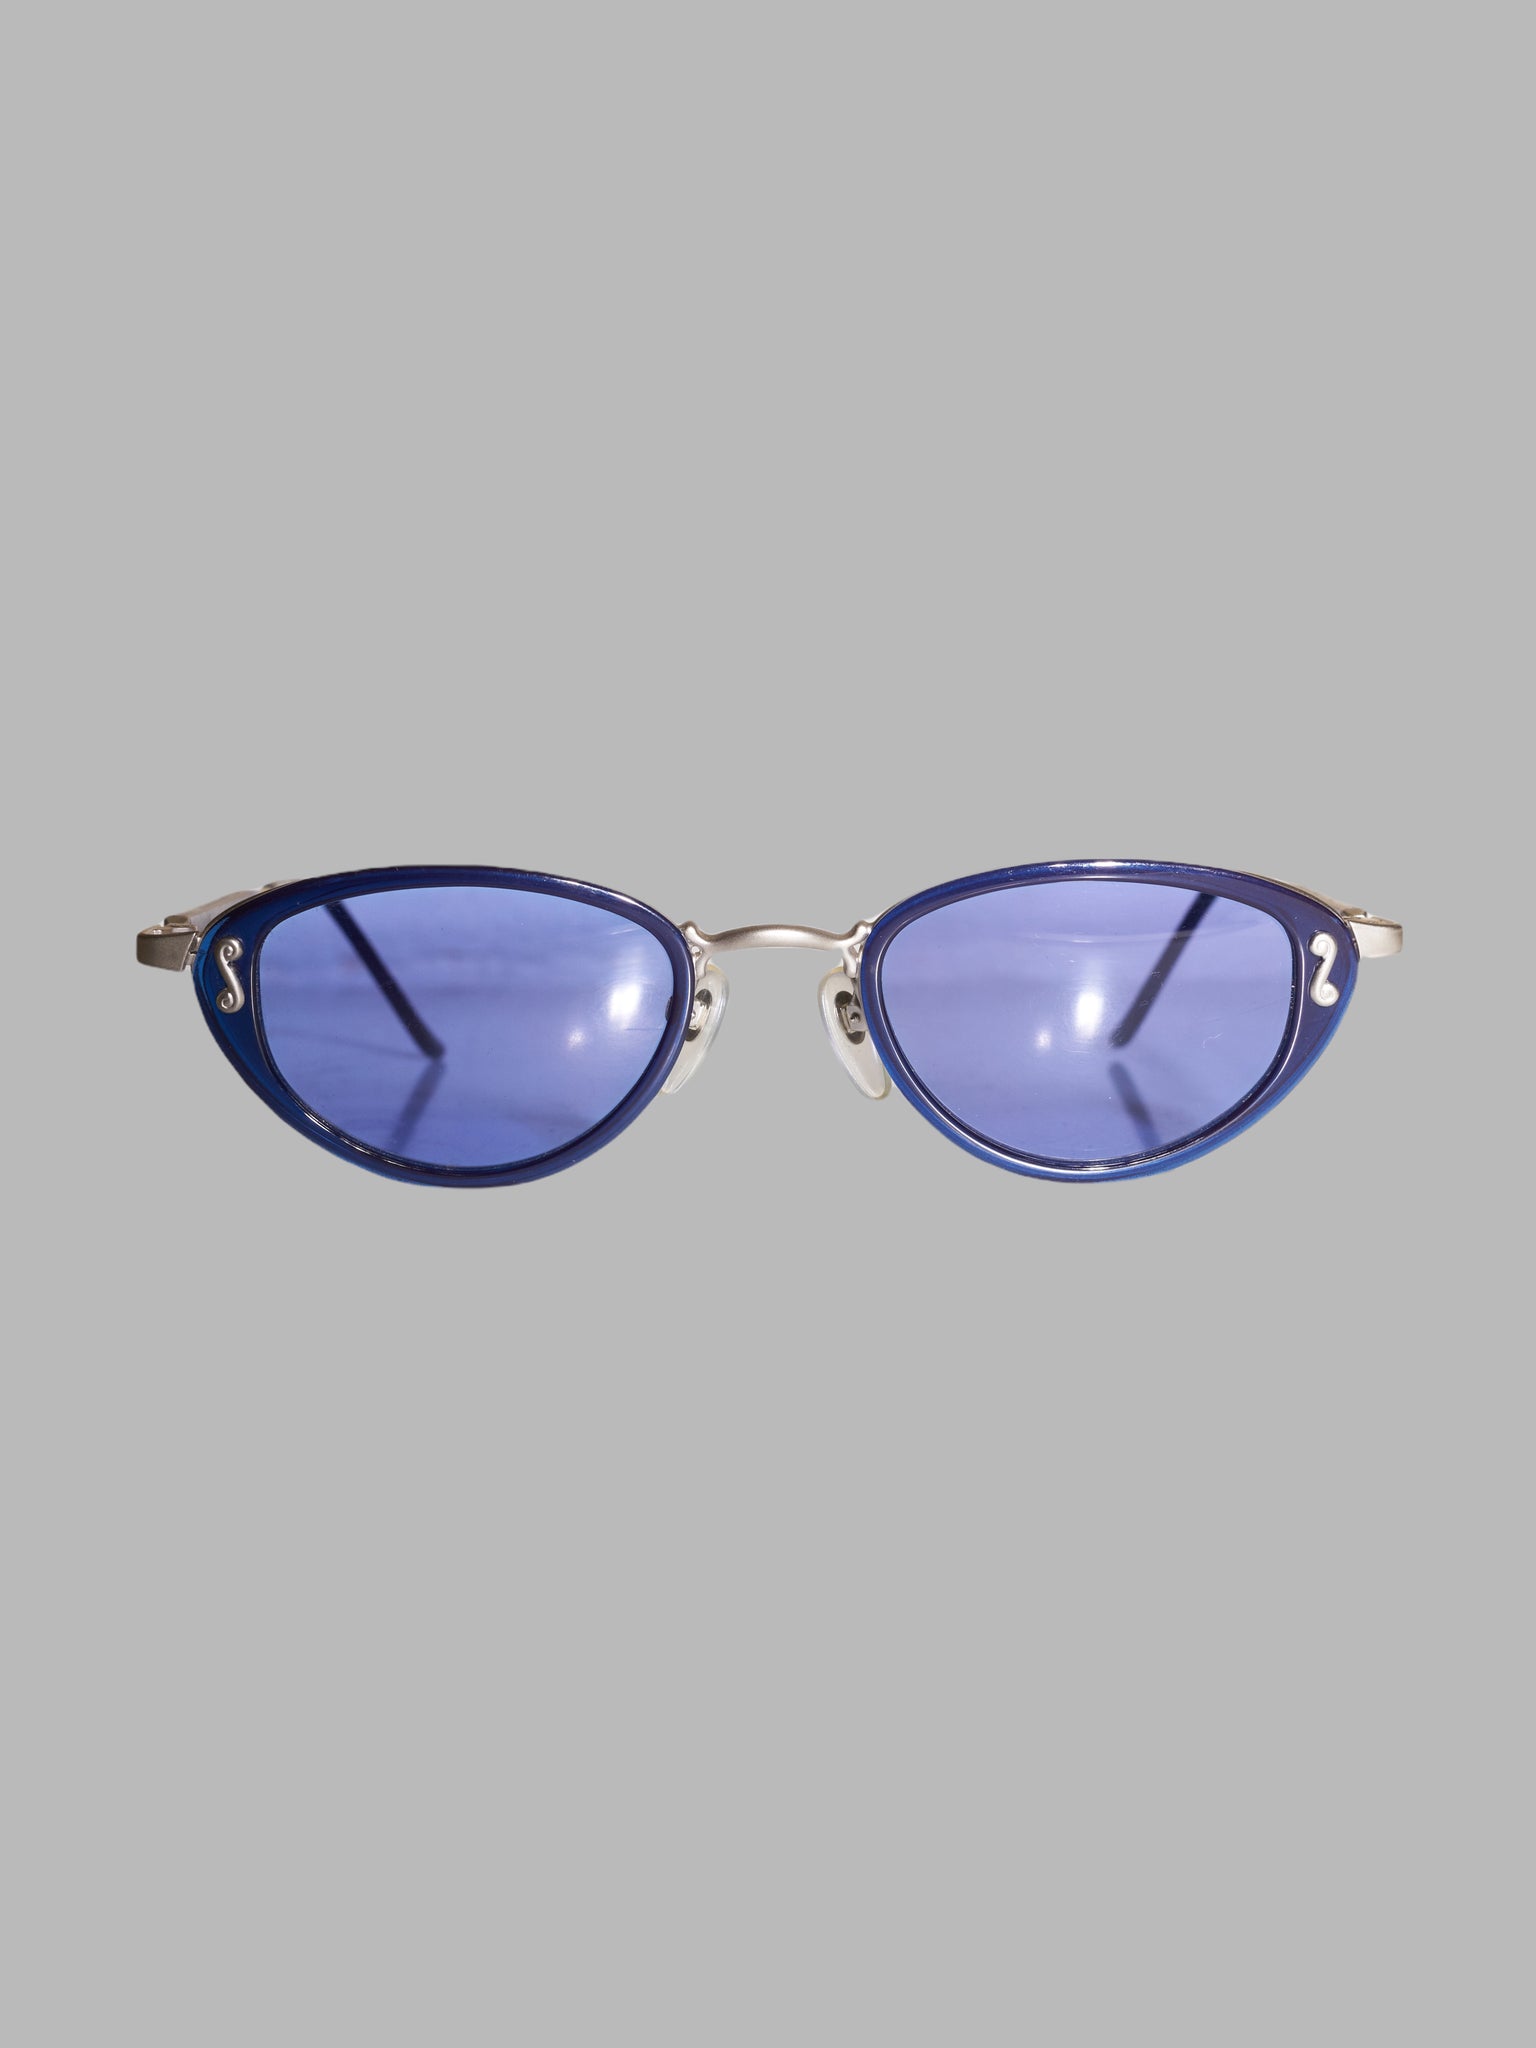 Martine Sitbon dark blue sunglasses with lighter blue lenses